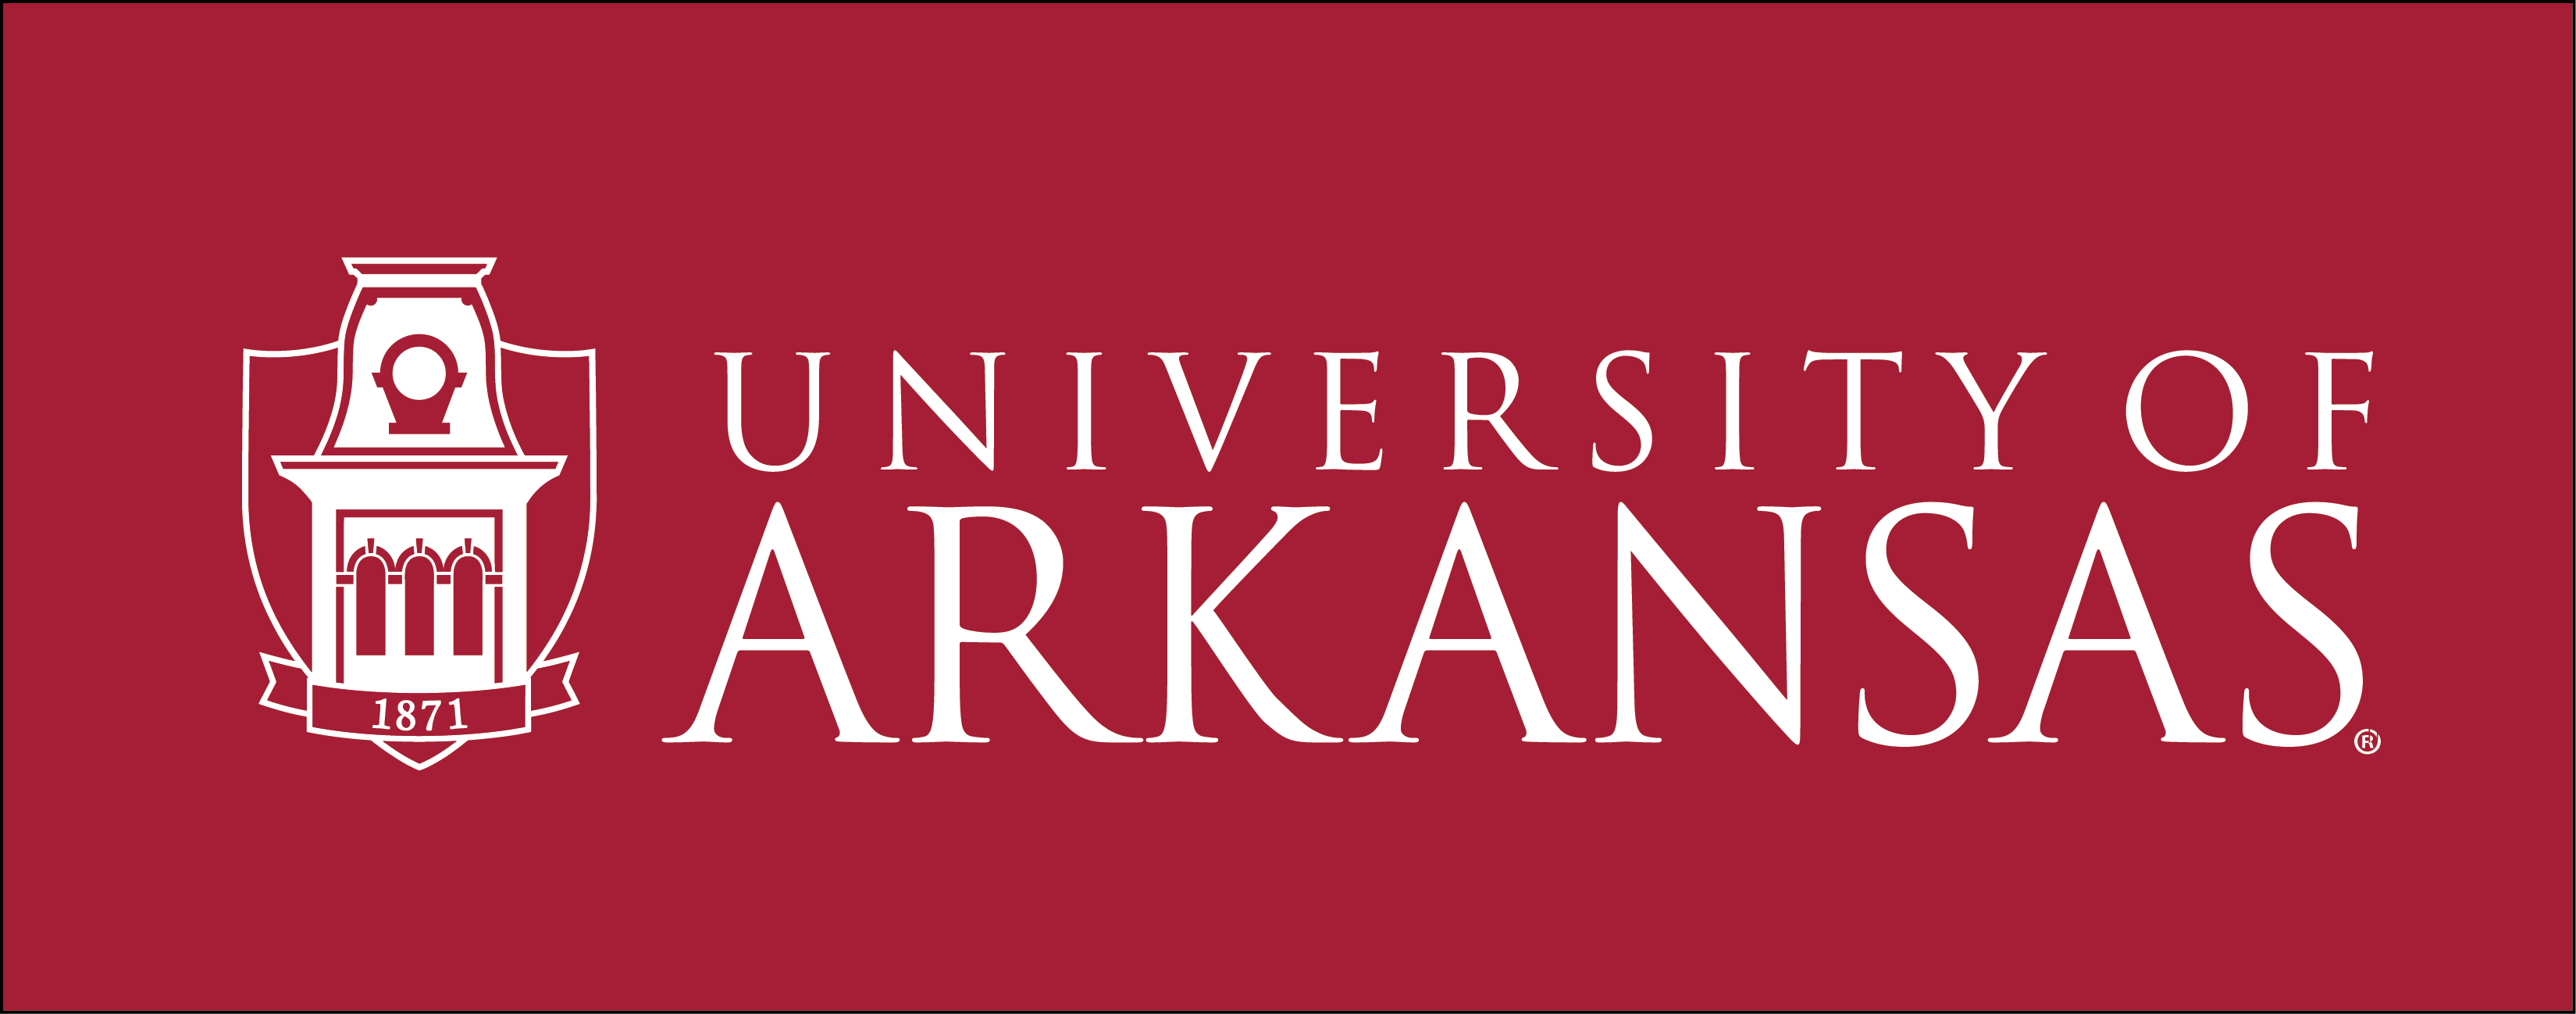 University of Arkansas Logo - Contact Us | Engineering World Health: University of Arkansas